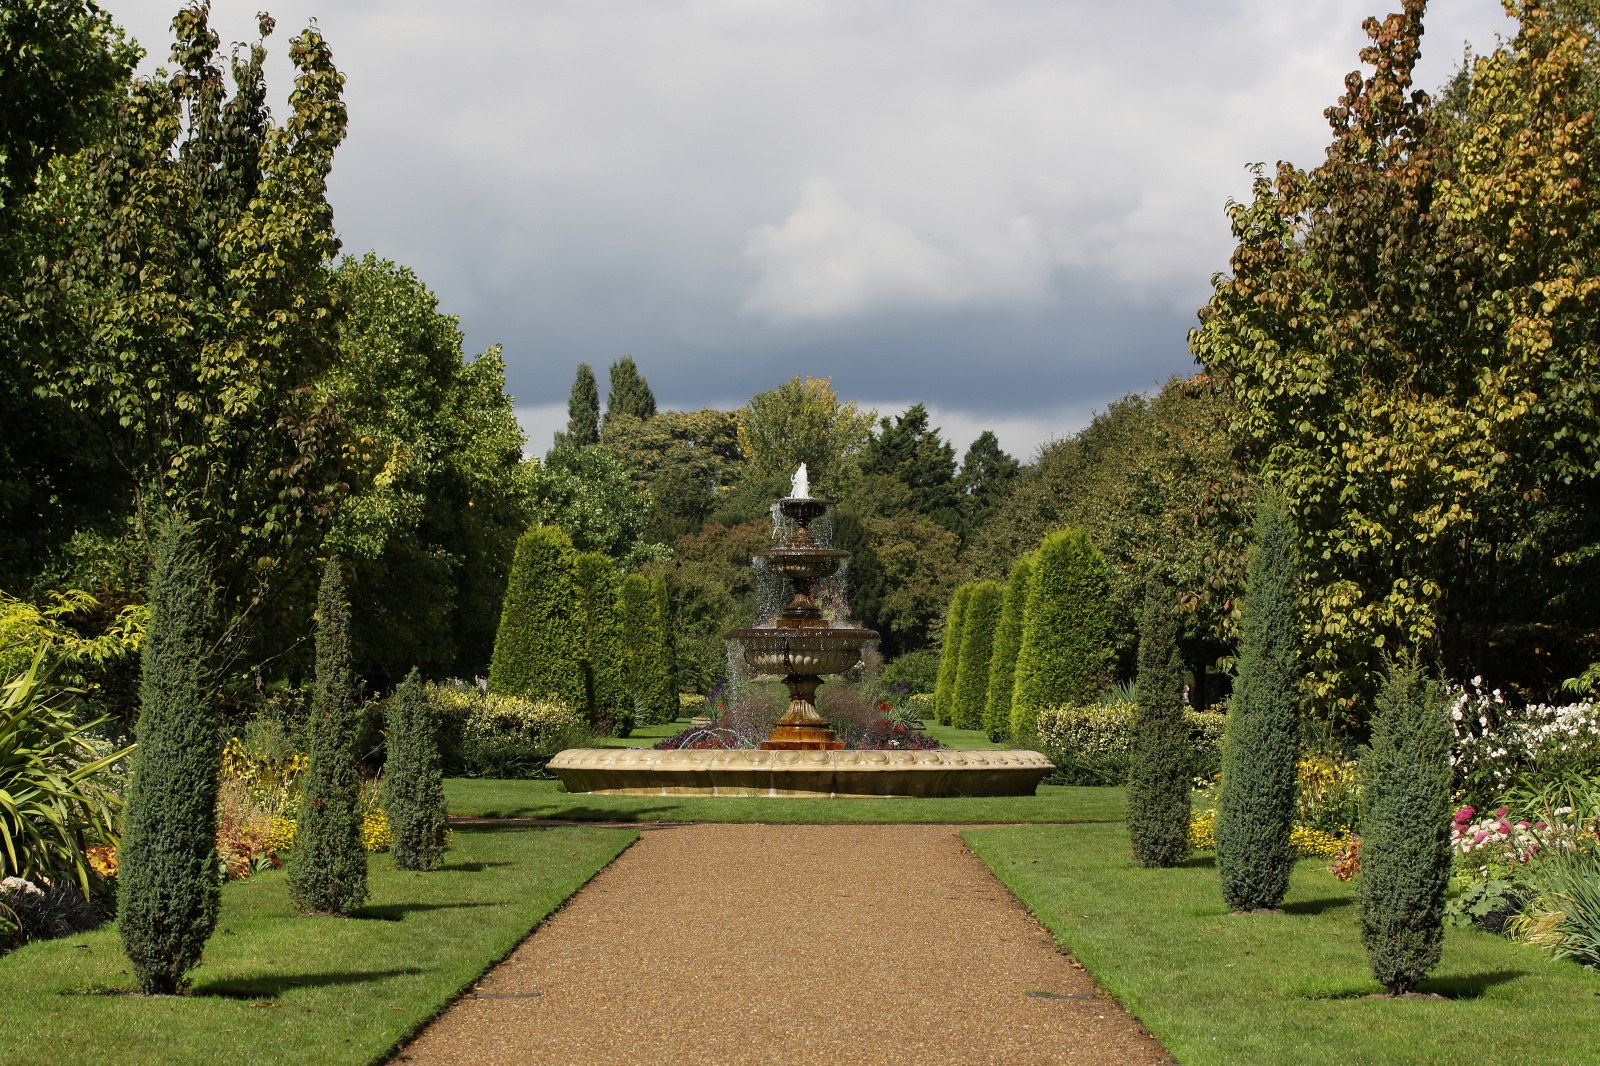 Английский парк картинки. Риджент парк ландшафт. Риджентс-парк садово-Парковое искусство. Парк в Кларемонте Англия. Английский пейзажный парк Англия.